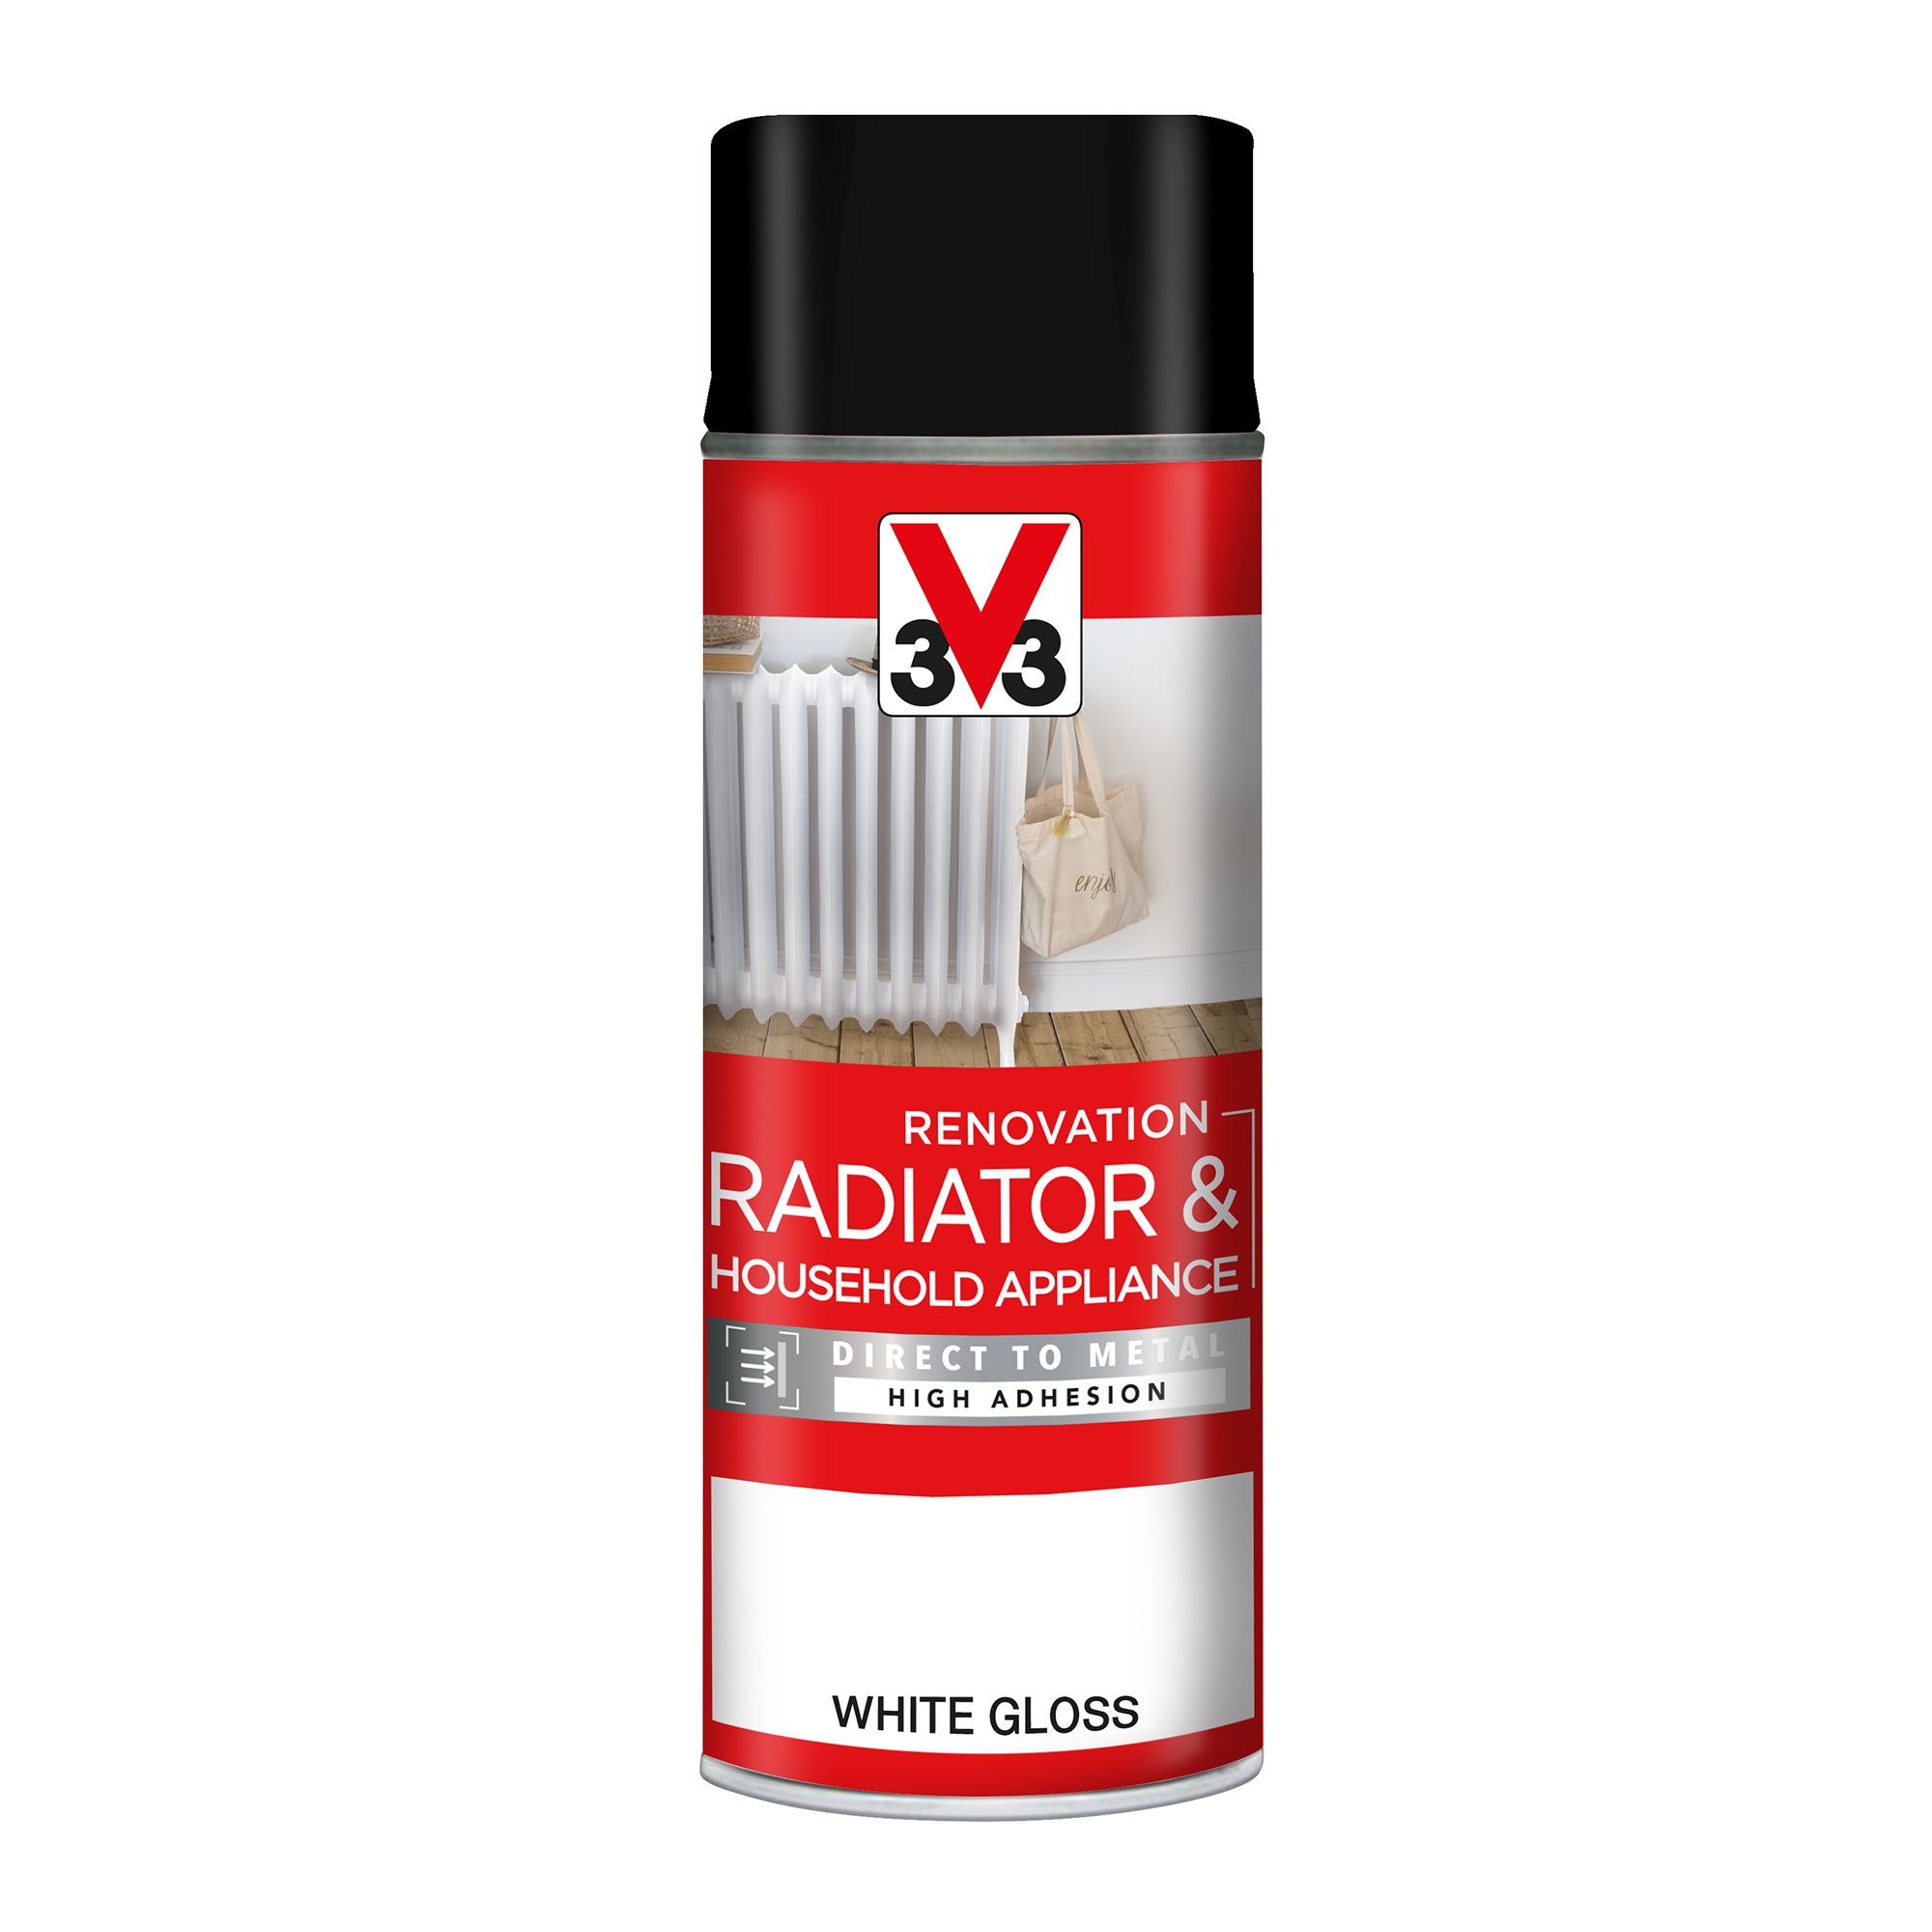 V33 Renovation White Gloss Radiator & appliance paint, 400ml Spray can